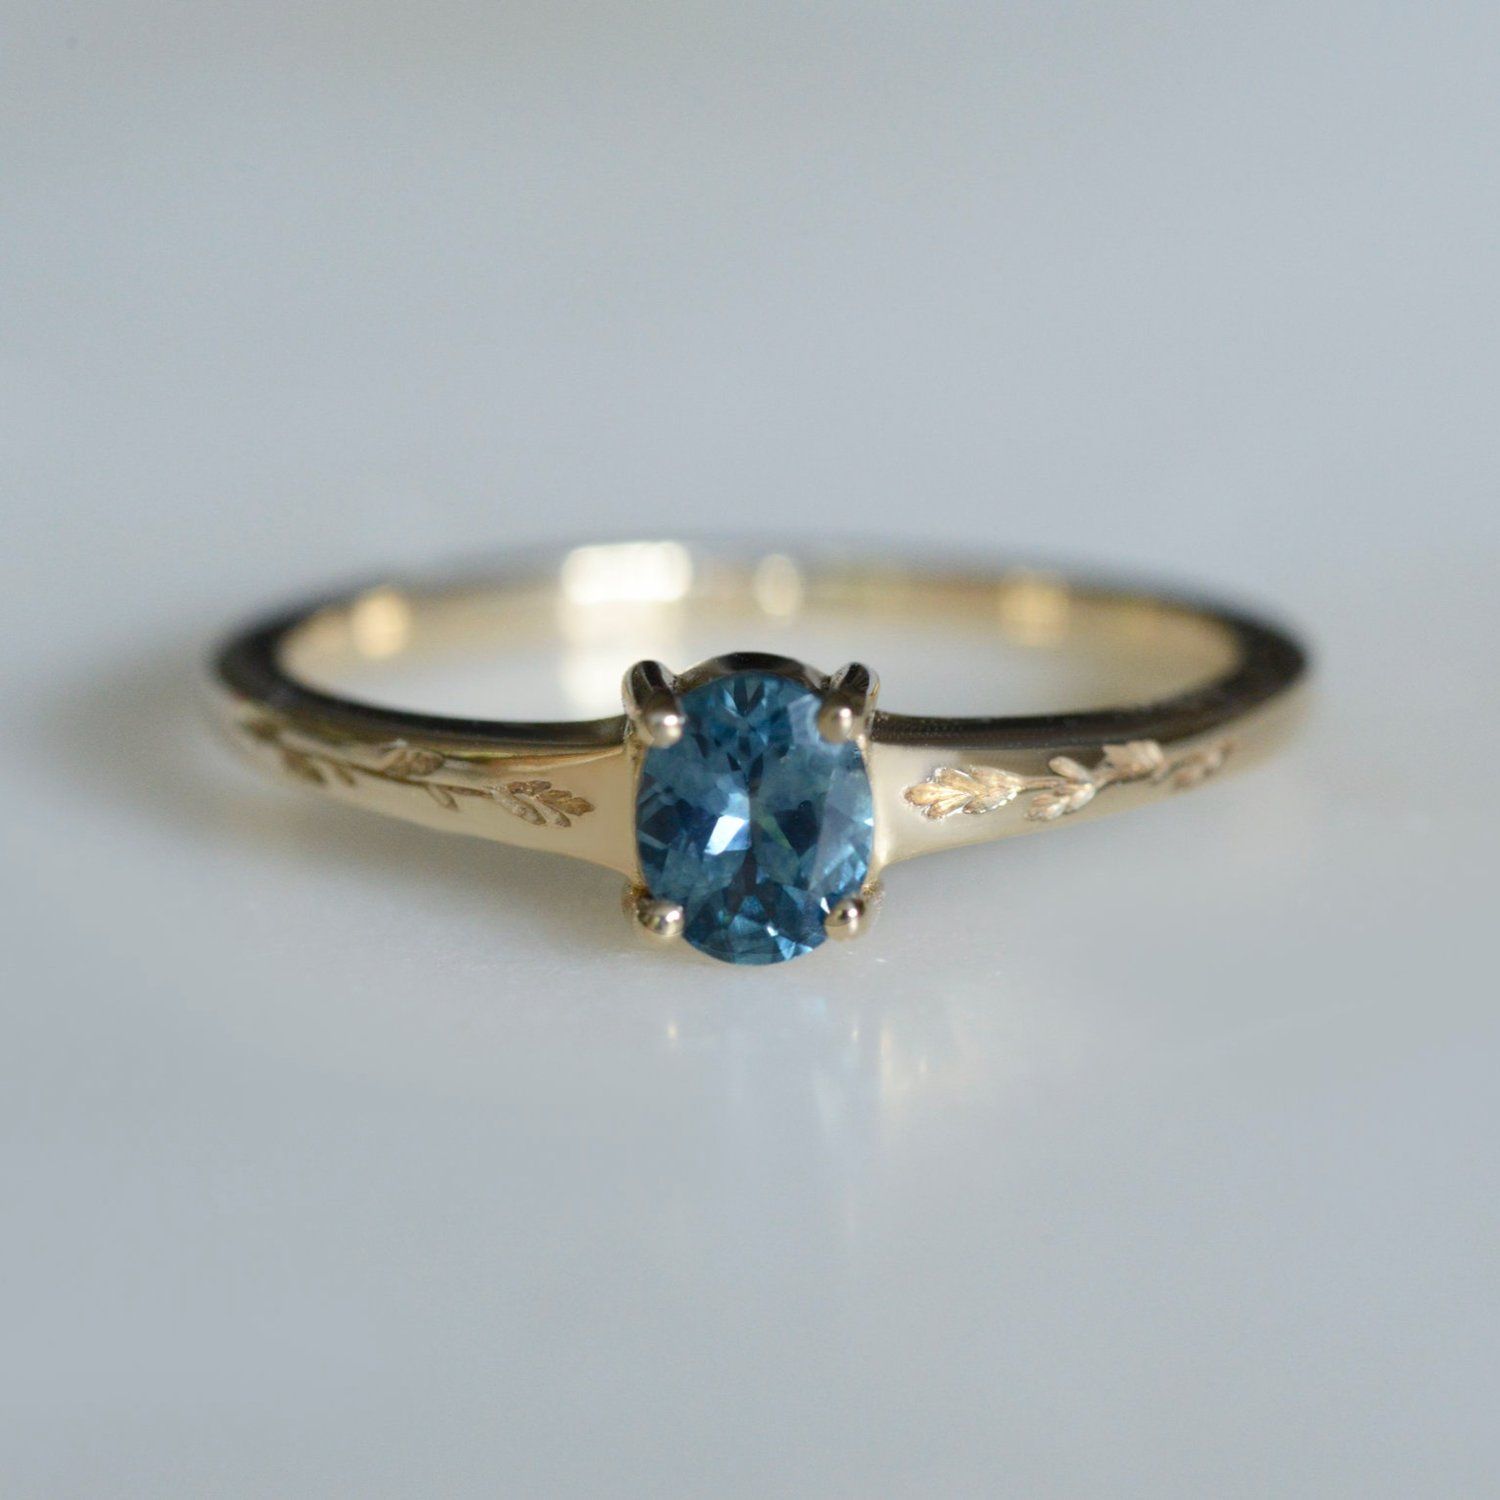 Choose the most unique design for engagement rings